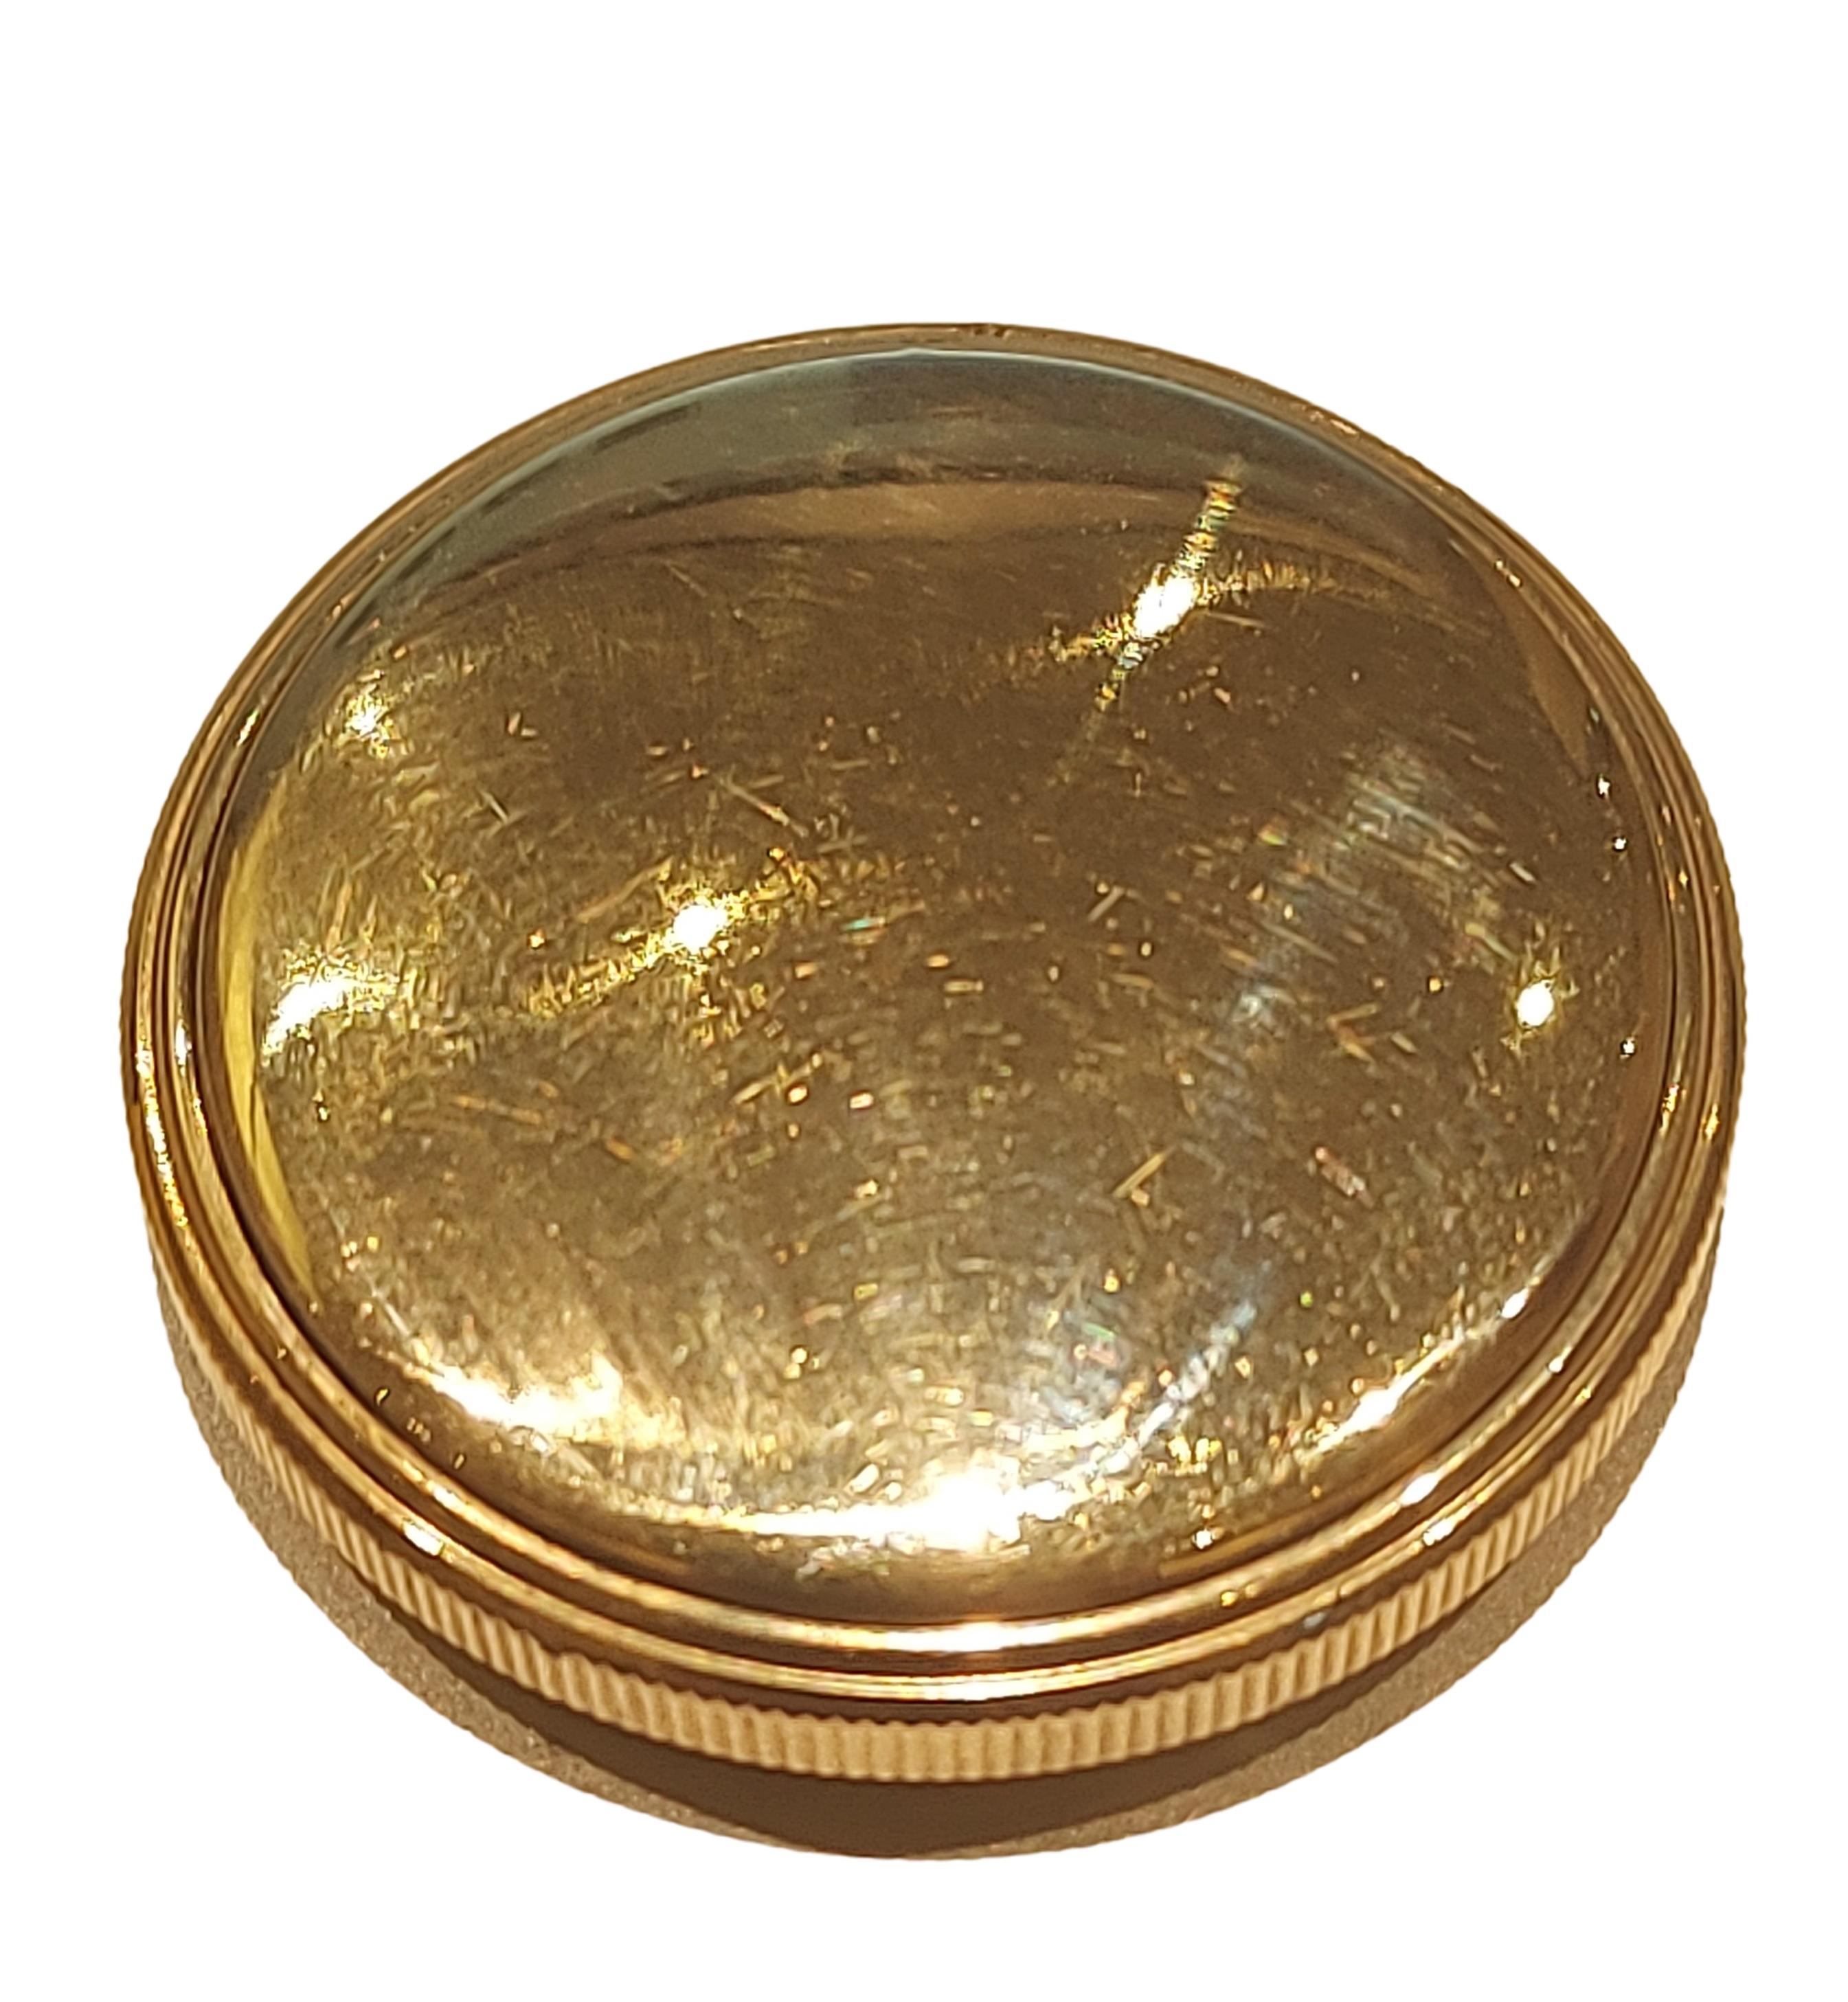 Artisan Rare montre de poche Ebel plaquée or en vente